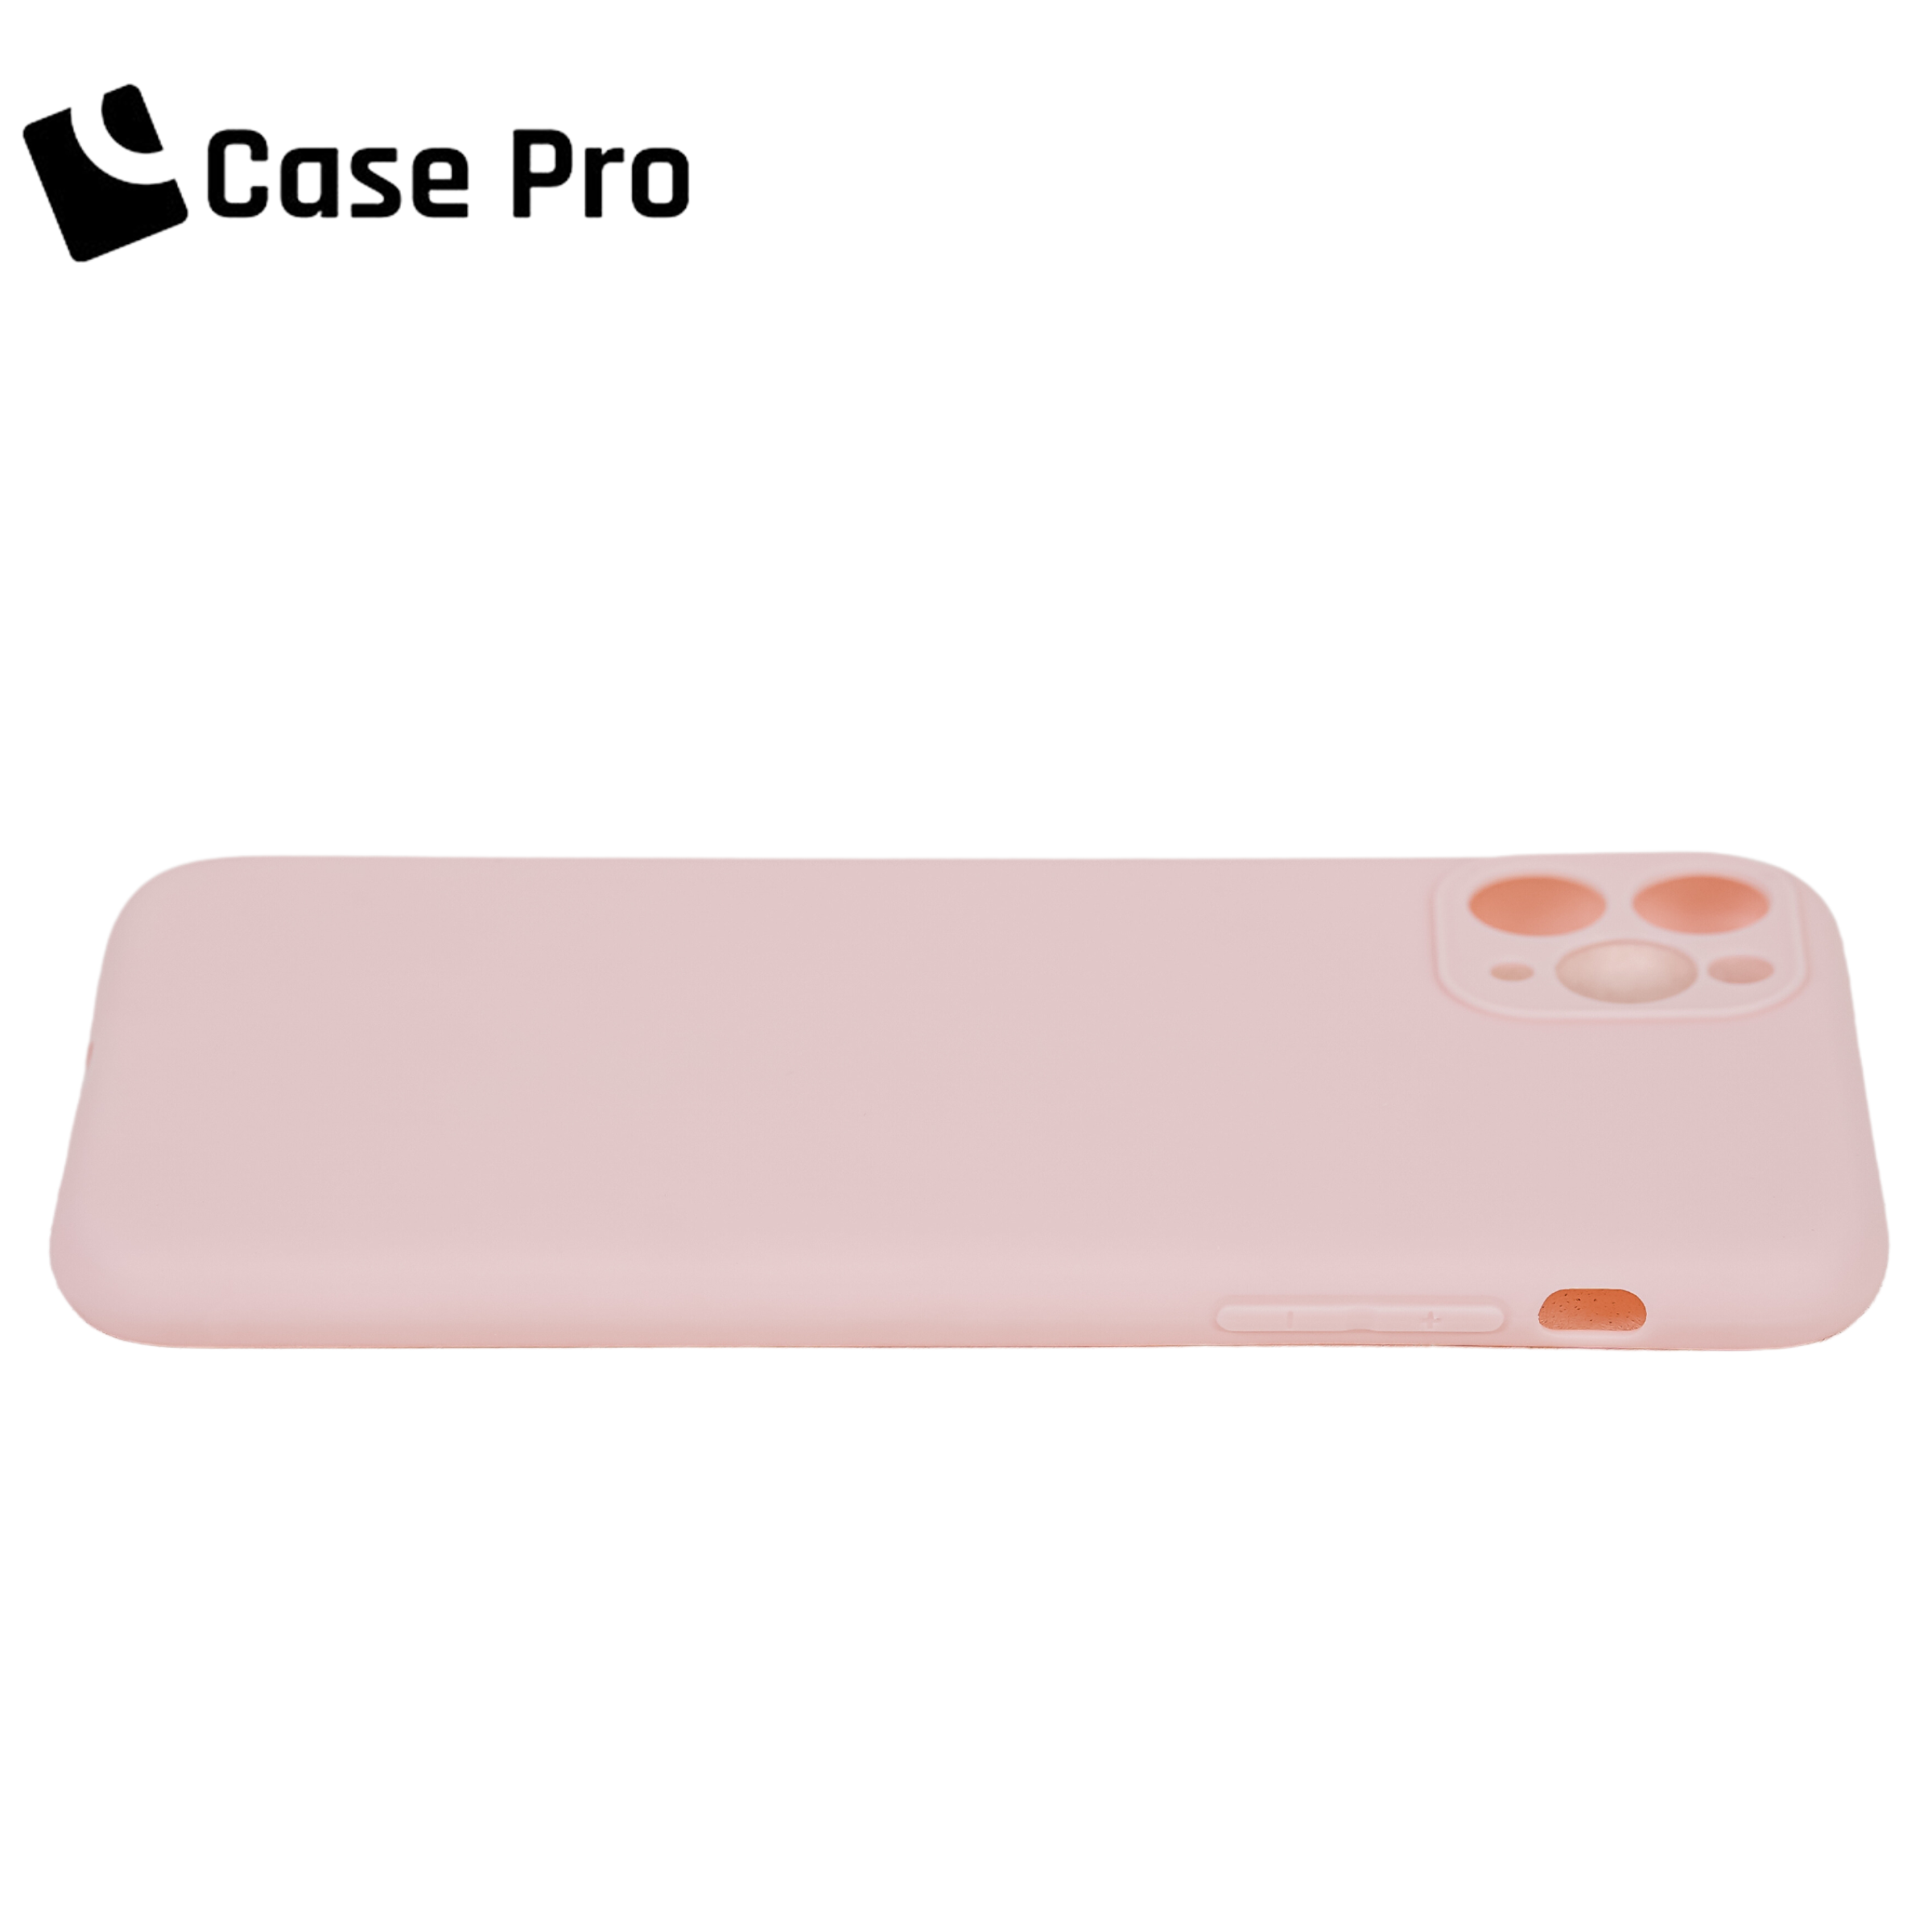 CasePro iPhone 11 Pro Max Case (Flexible)